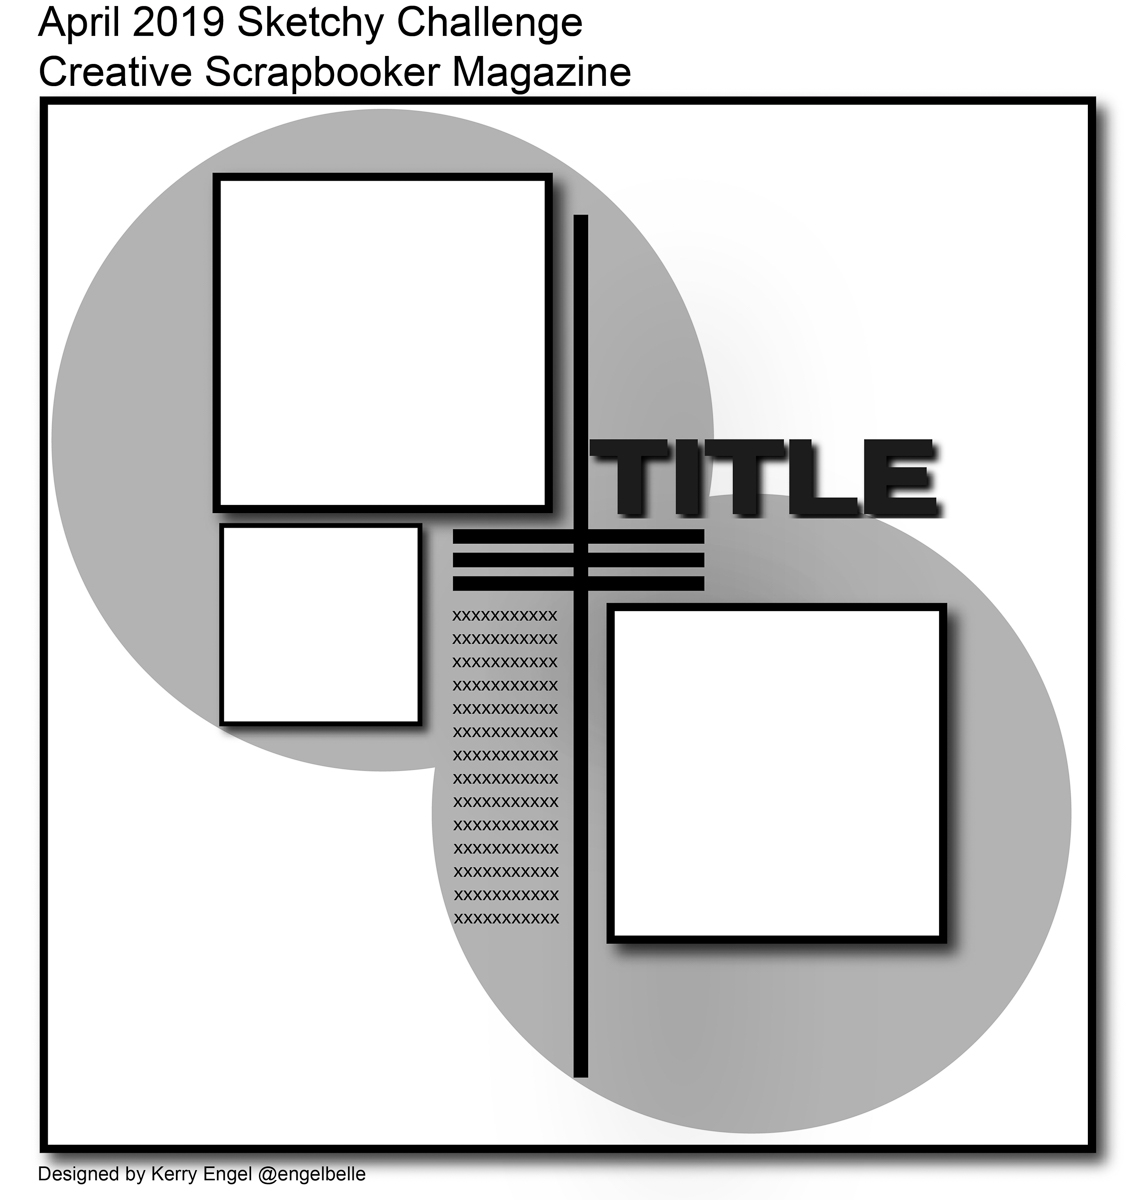 Creative Scrapbooker Magazine's April Sketchy Challenge